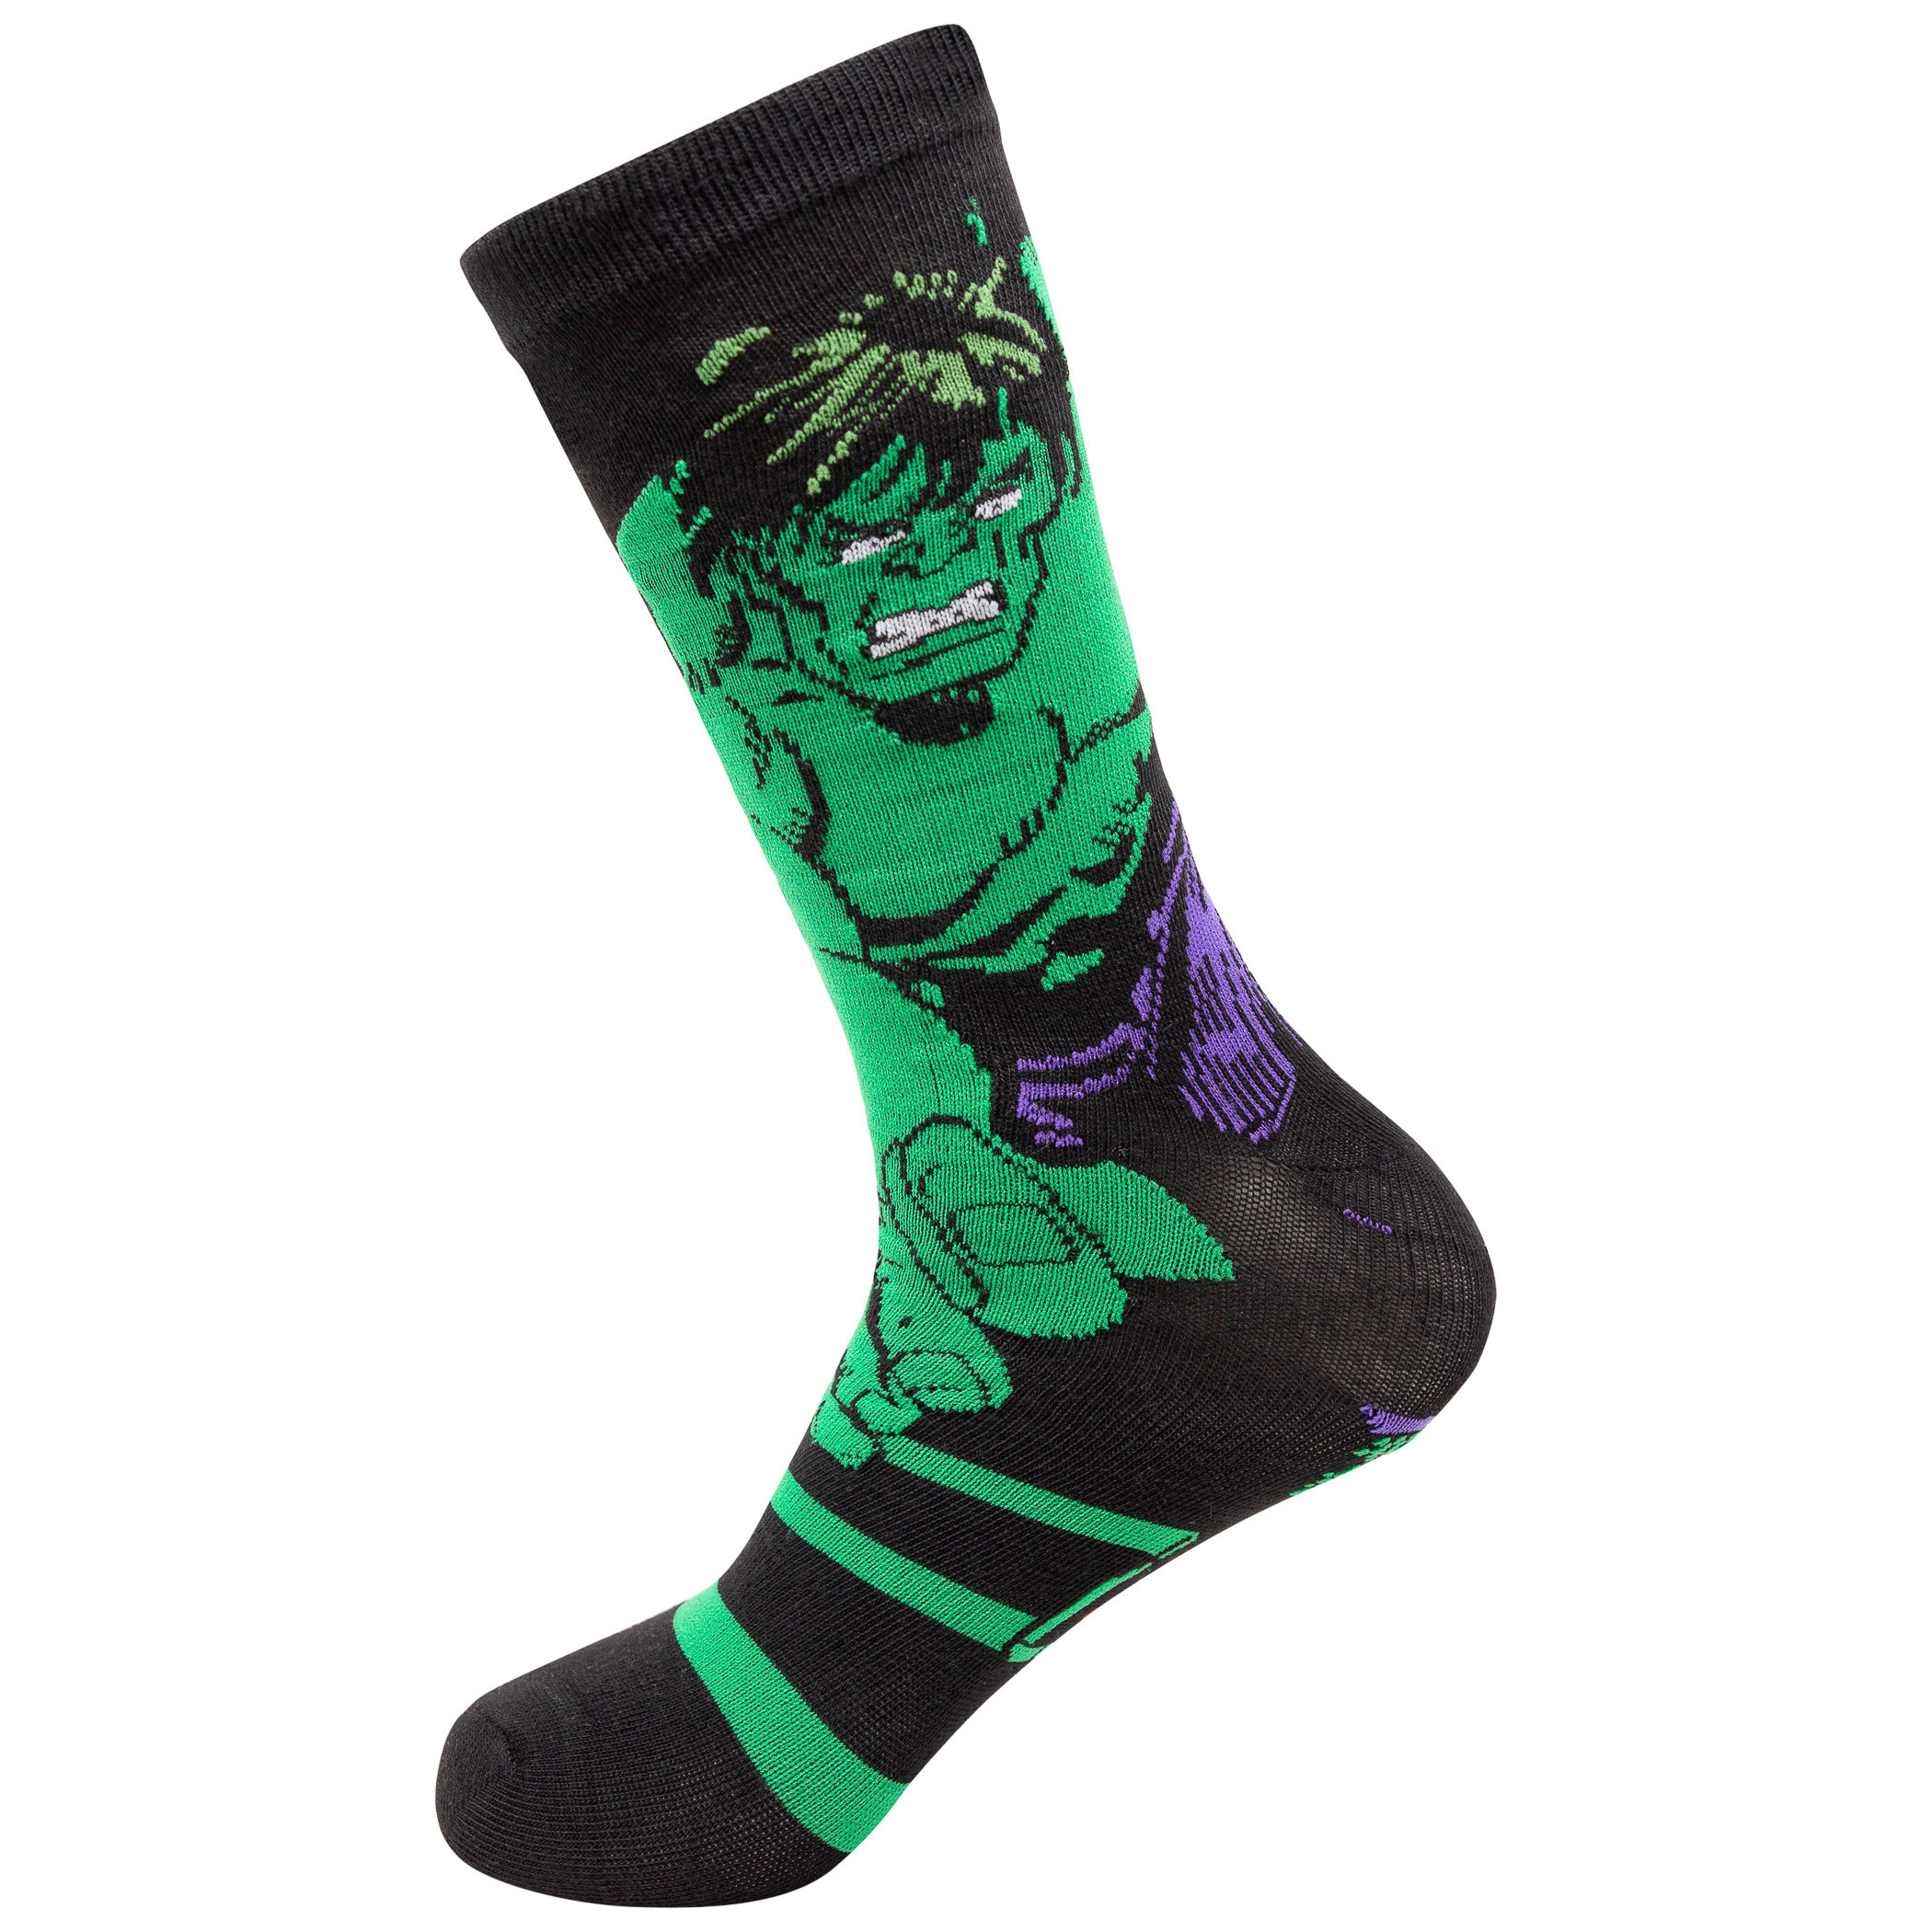 The Incredible Hulk and Avengers 2-Pack Crew Socks